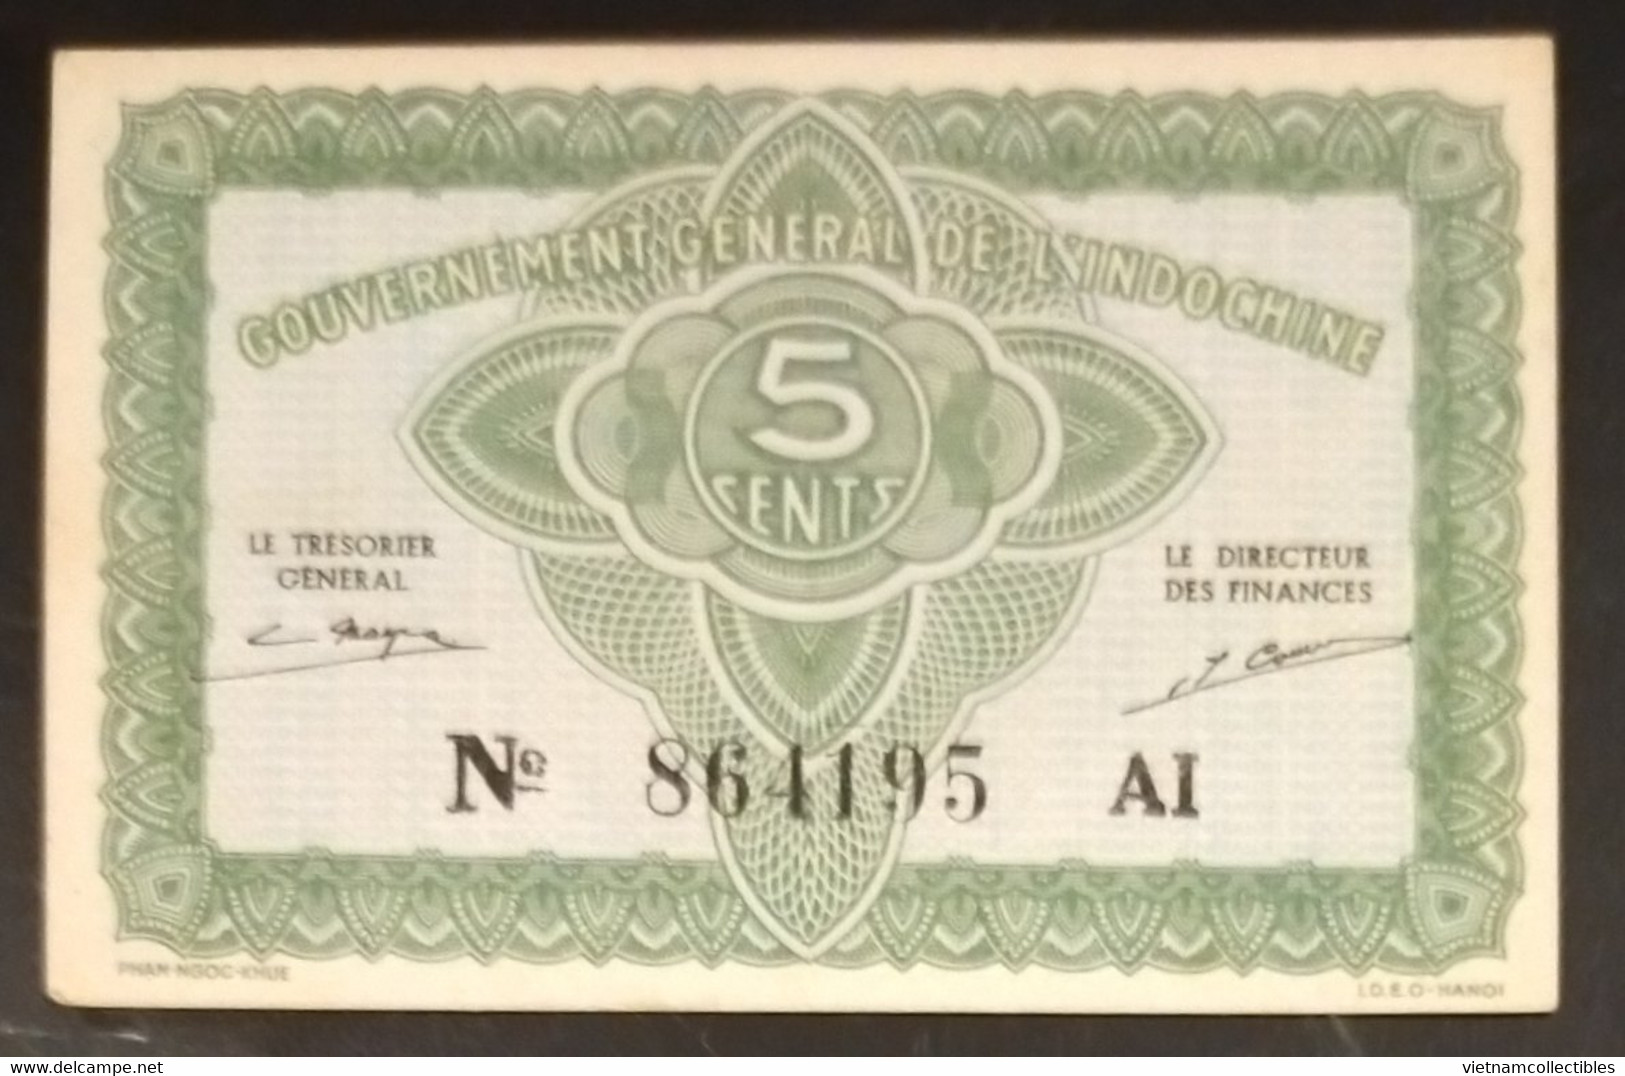 French Indochine Indochina Vietnam Viet Nam Laos Cambodia 5 Cents AU Banknote Note Billet 1942 - Pick # 88a / 2 Photos - Indochina